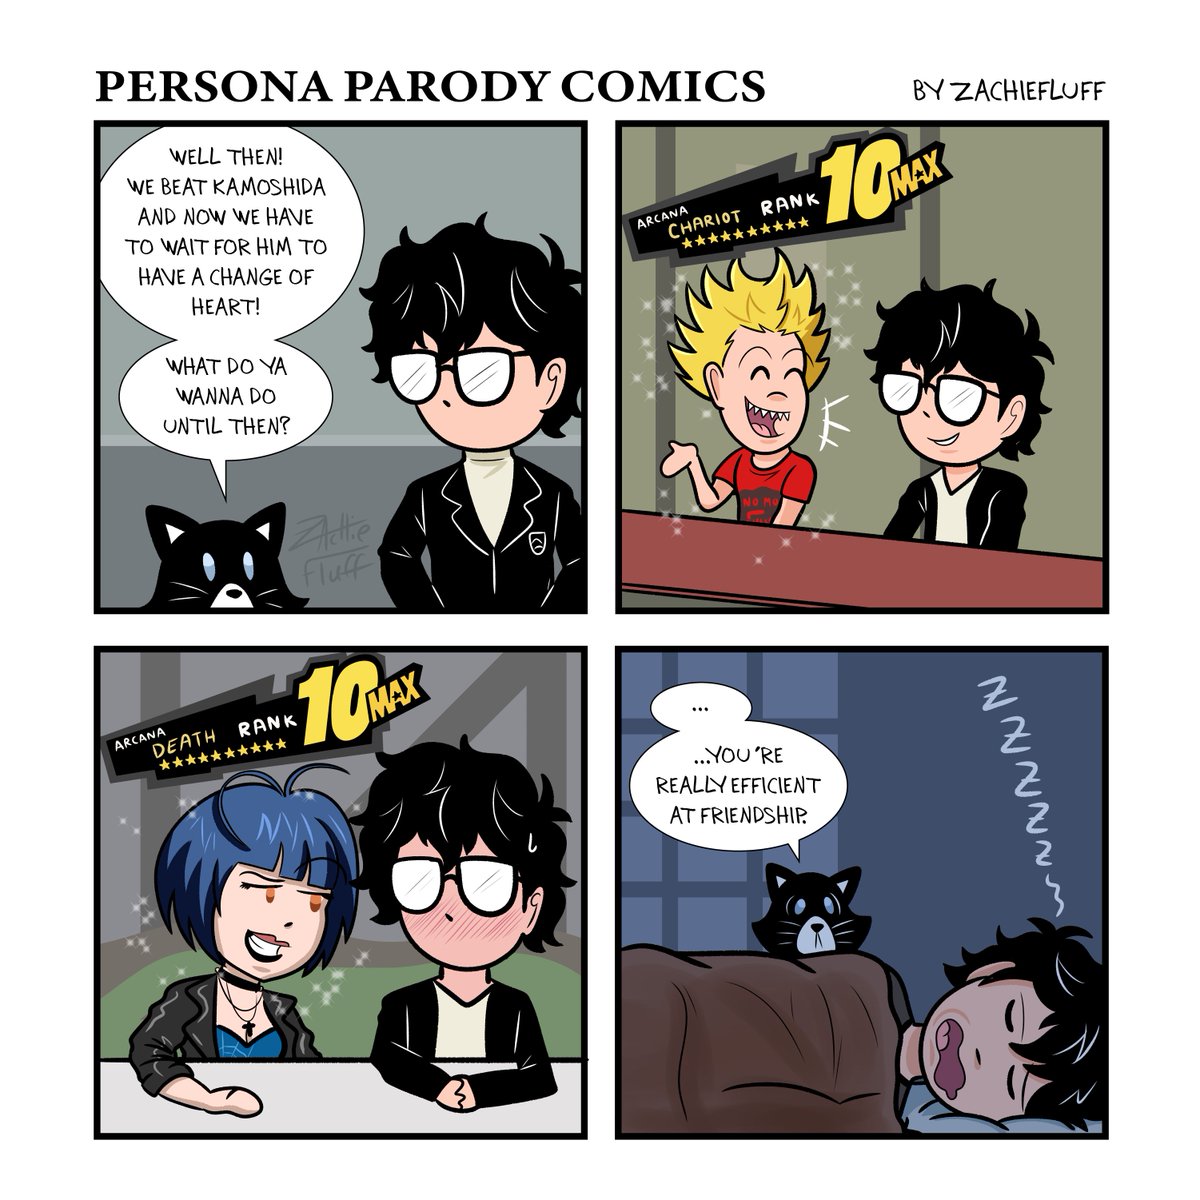 Time to maximize some bonds! 💪

#Persona5 #comicstrip #fancomic